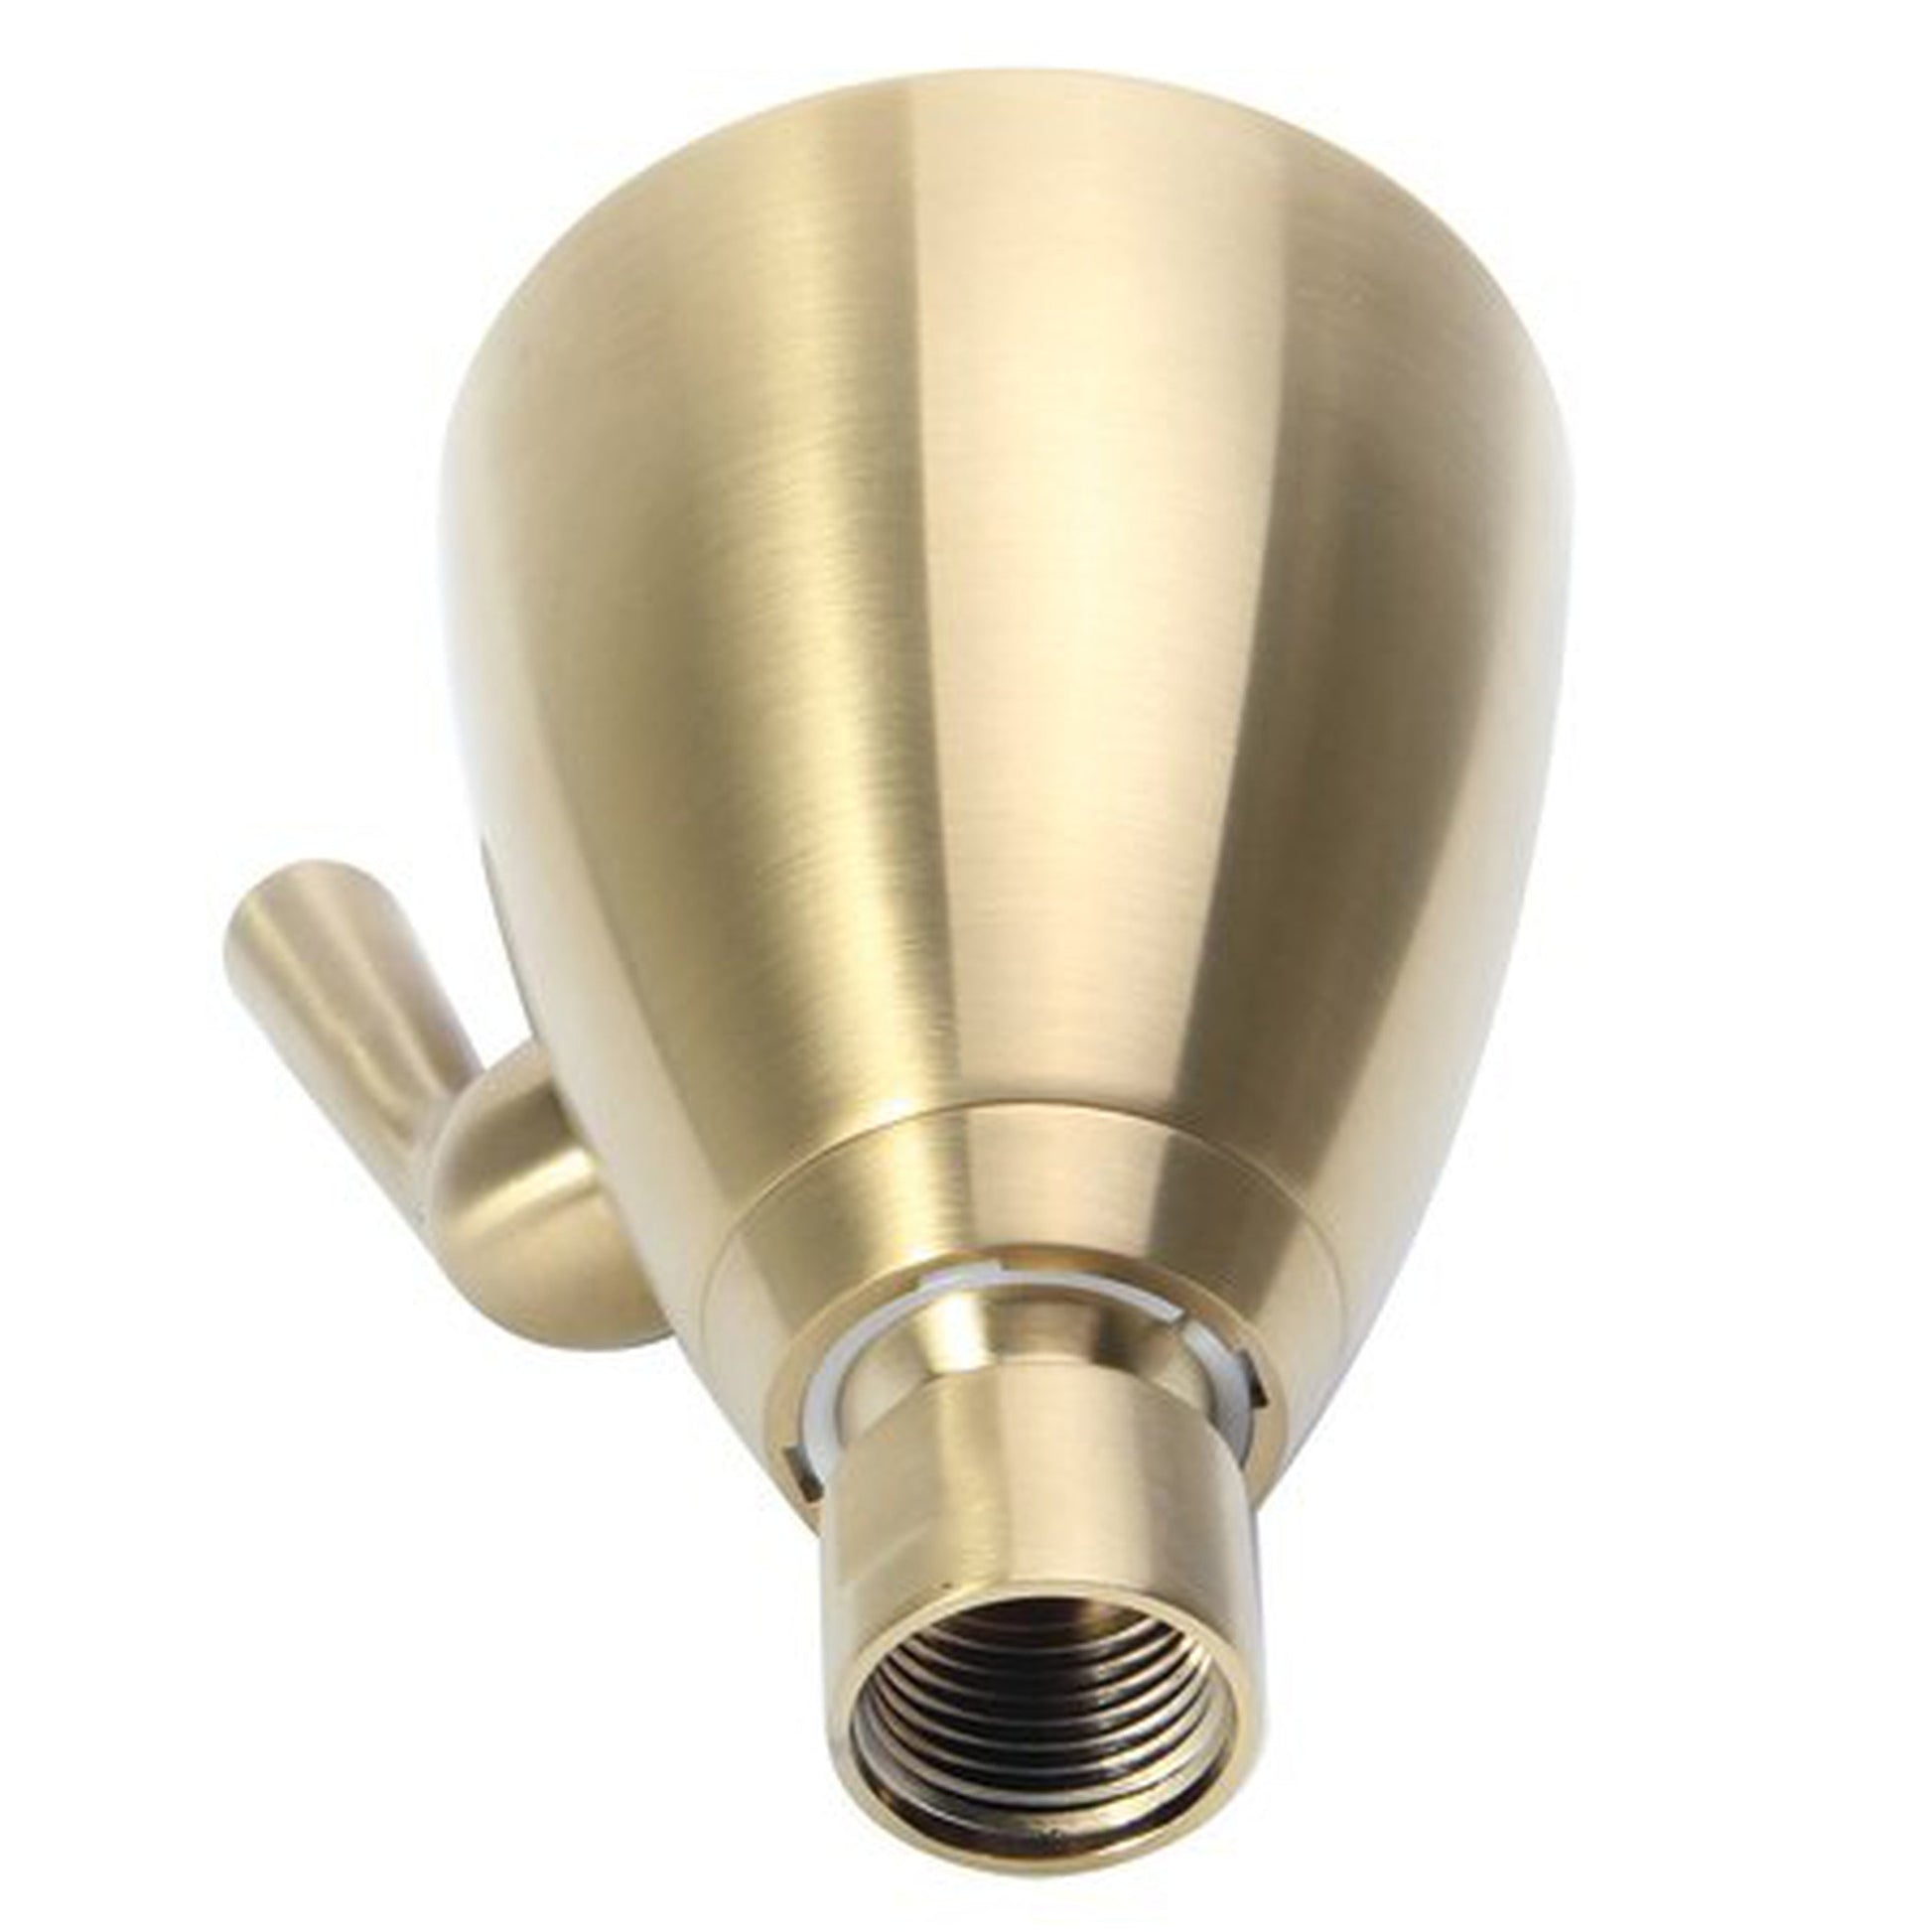 Speakman Icon 6-Jet 3-Spray Pattern Low Flow 1.75 GPM Solid Brass Shower Head in Aged Brass Finish